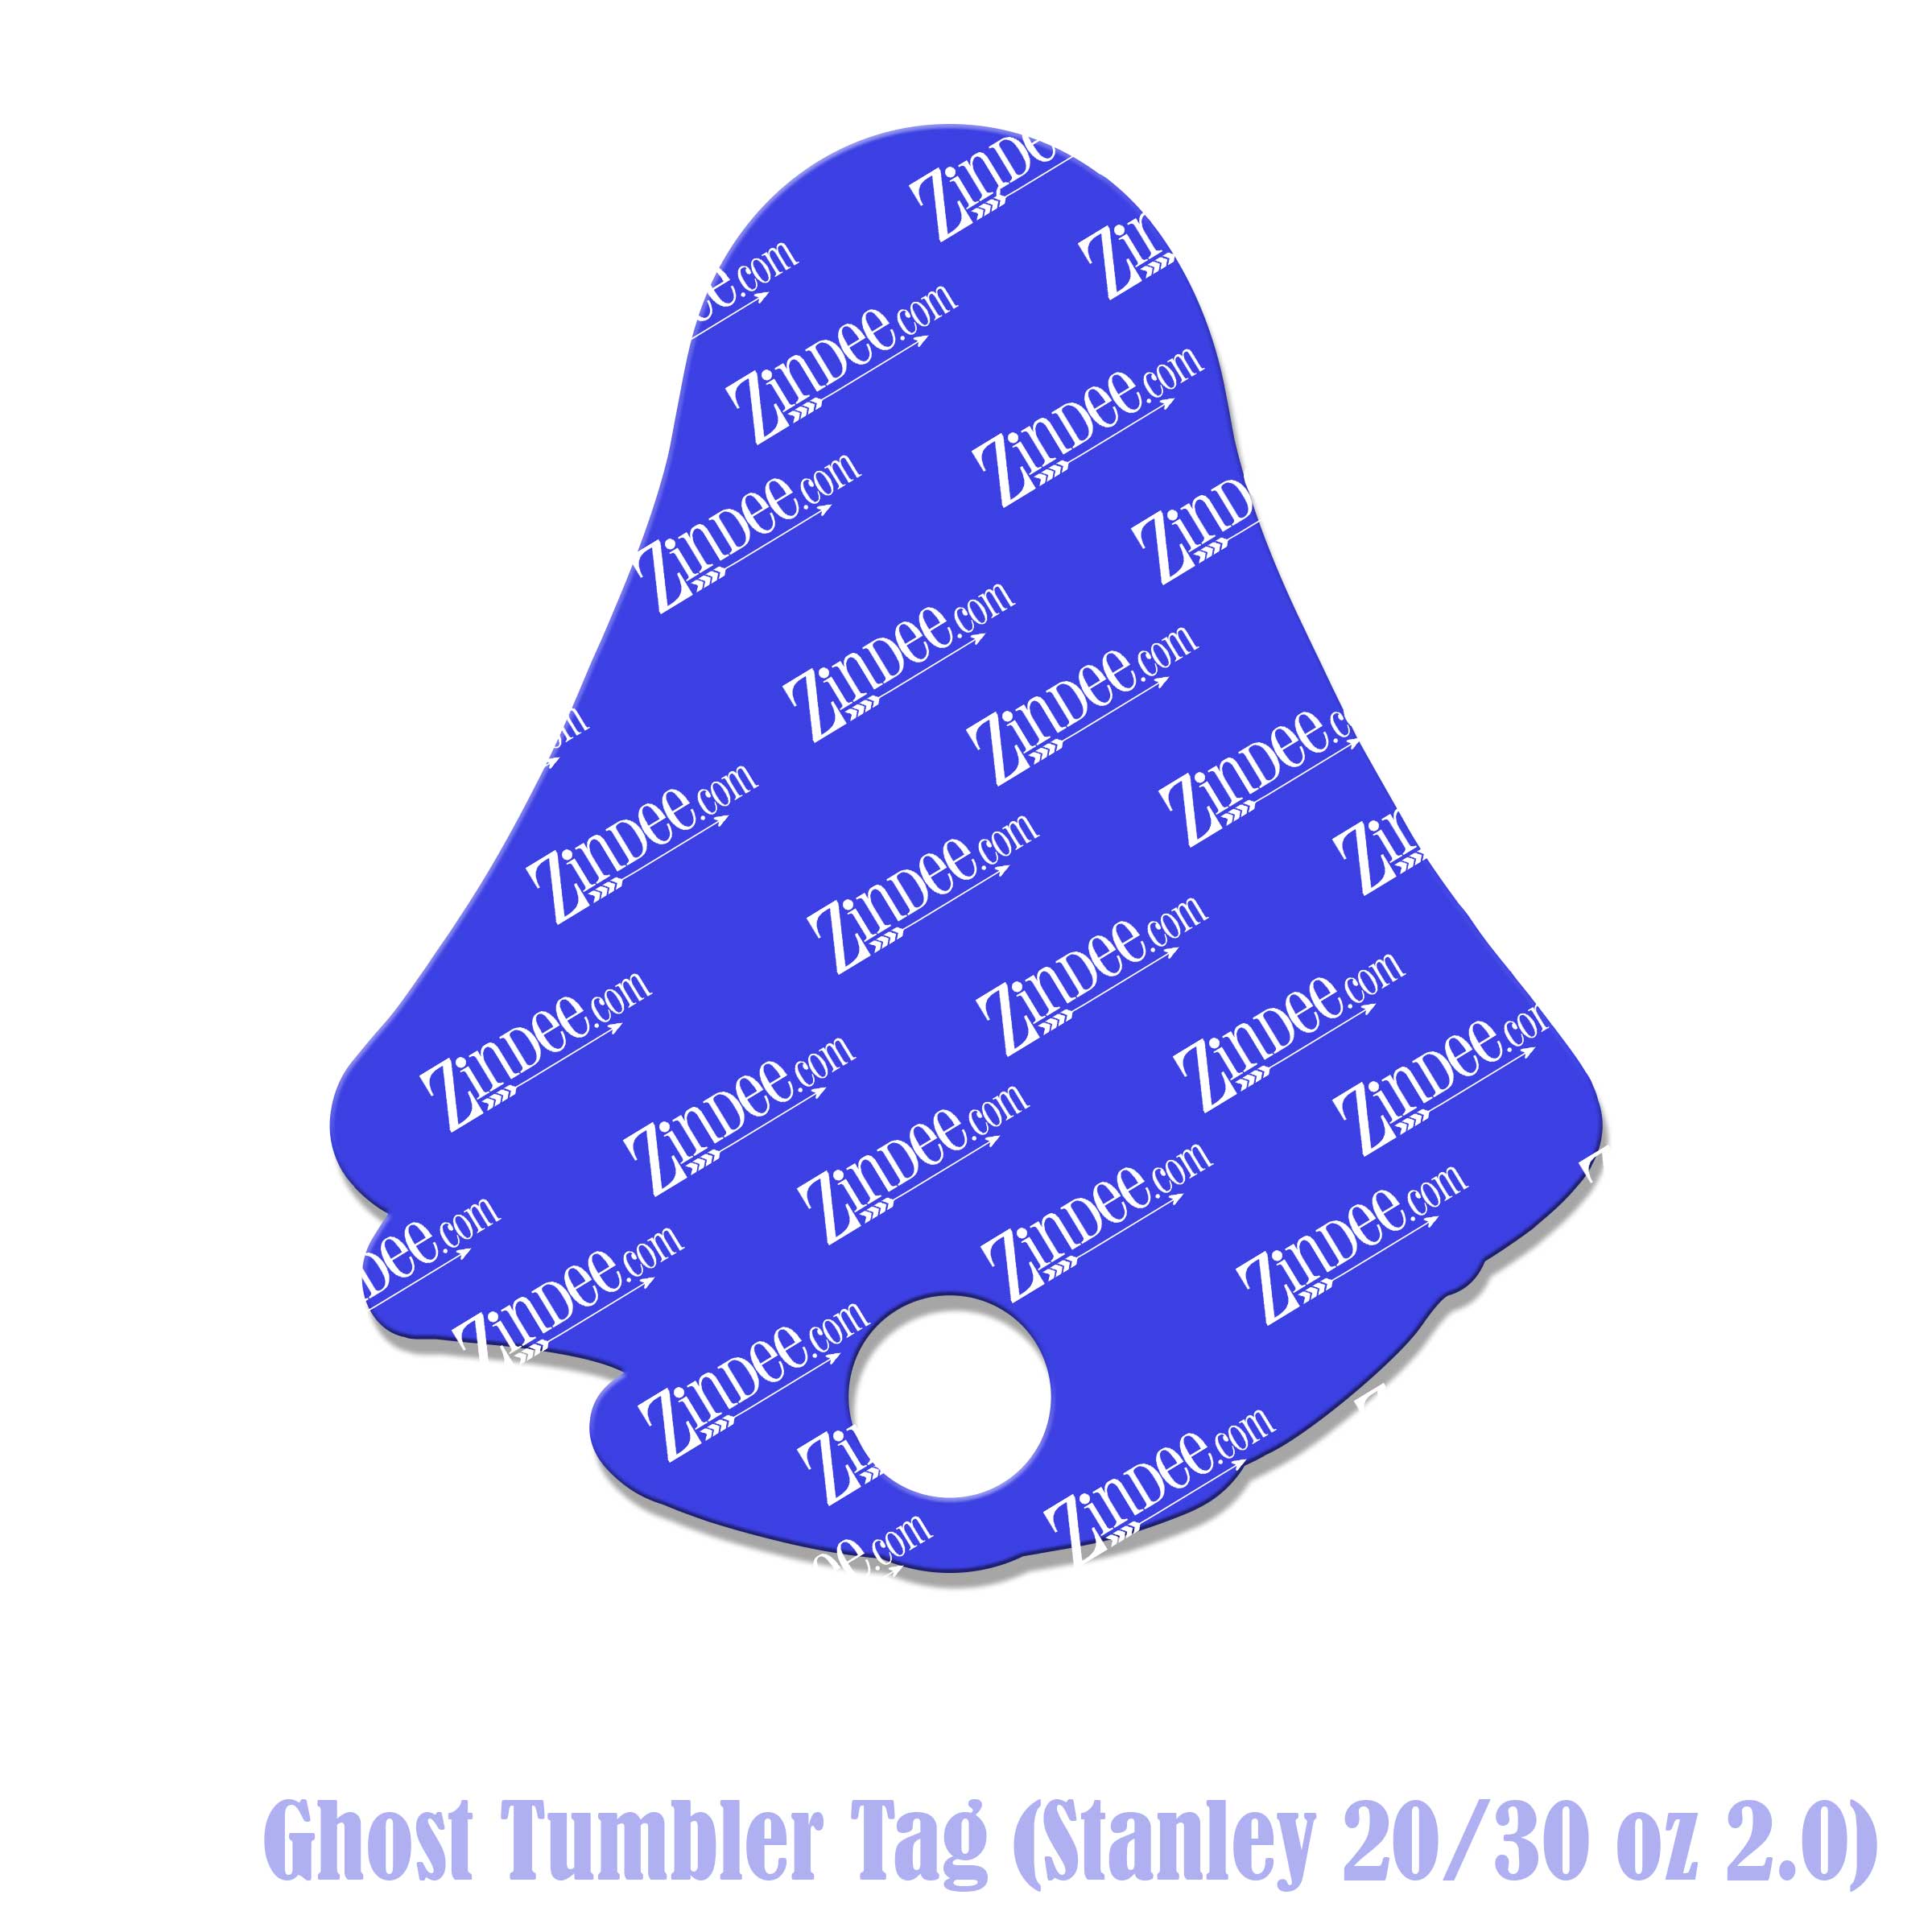 Ghost Tumbler Tag (Stanley 20/30 oz 2.0) –